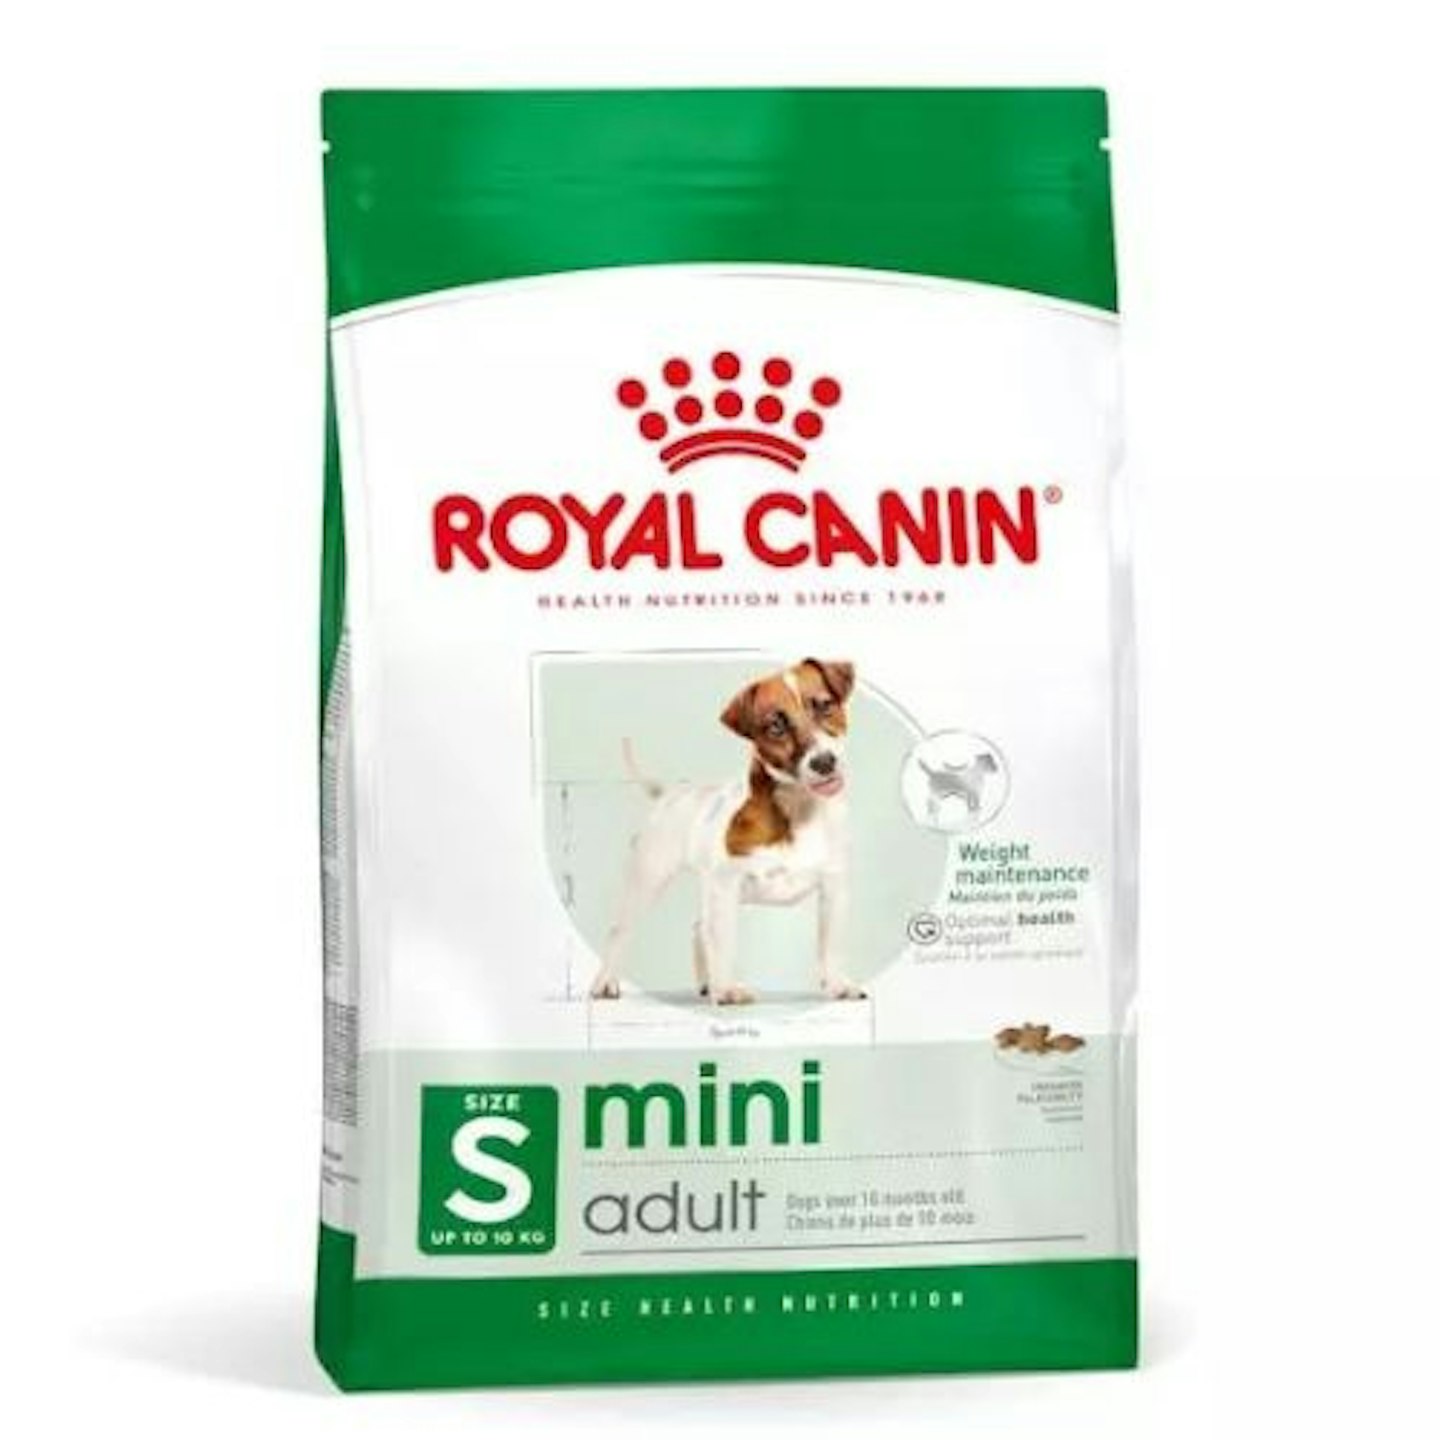 Royal Canin Mini Food